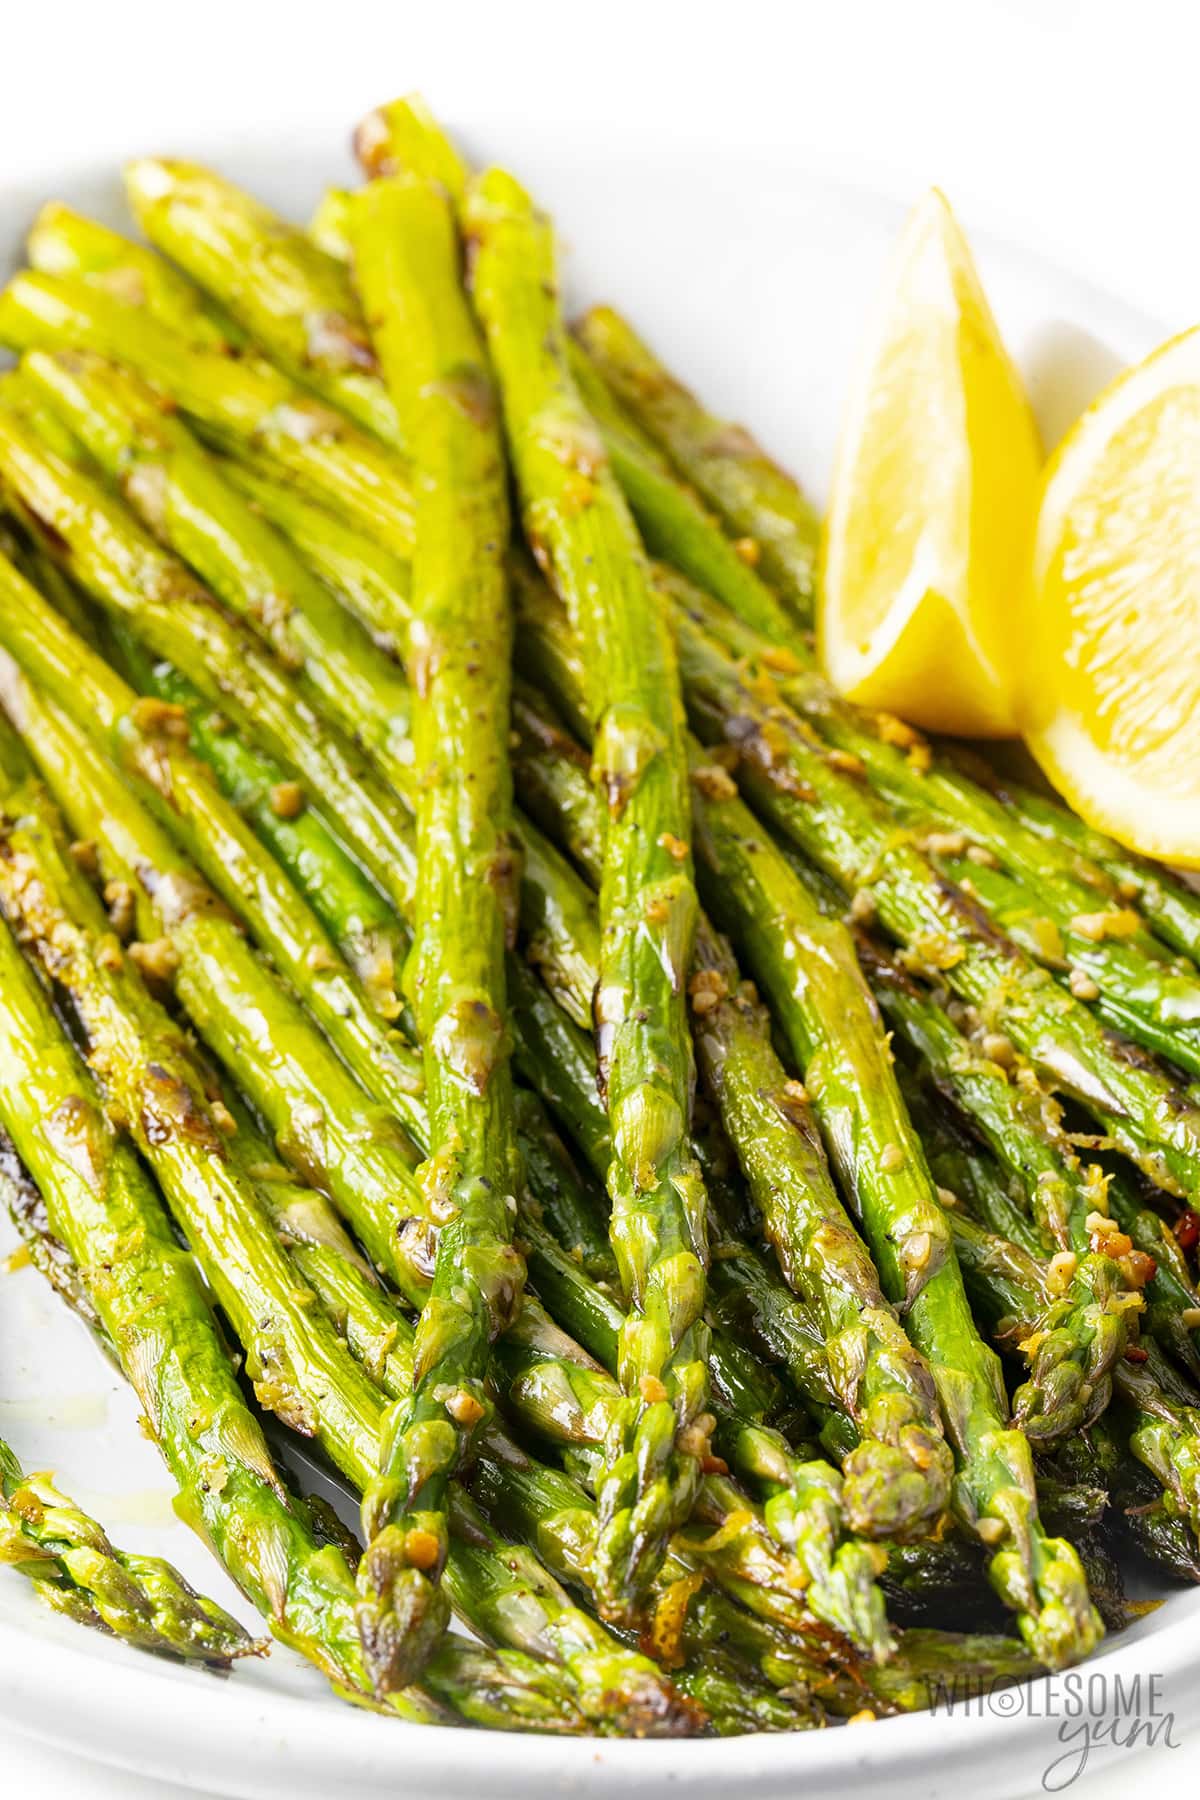 Sauteed asparagus up close.